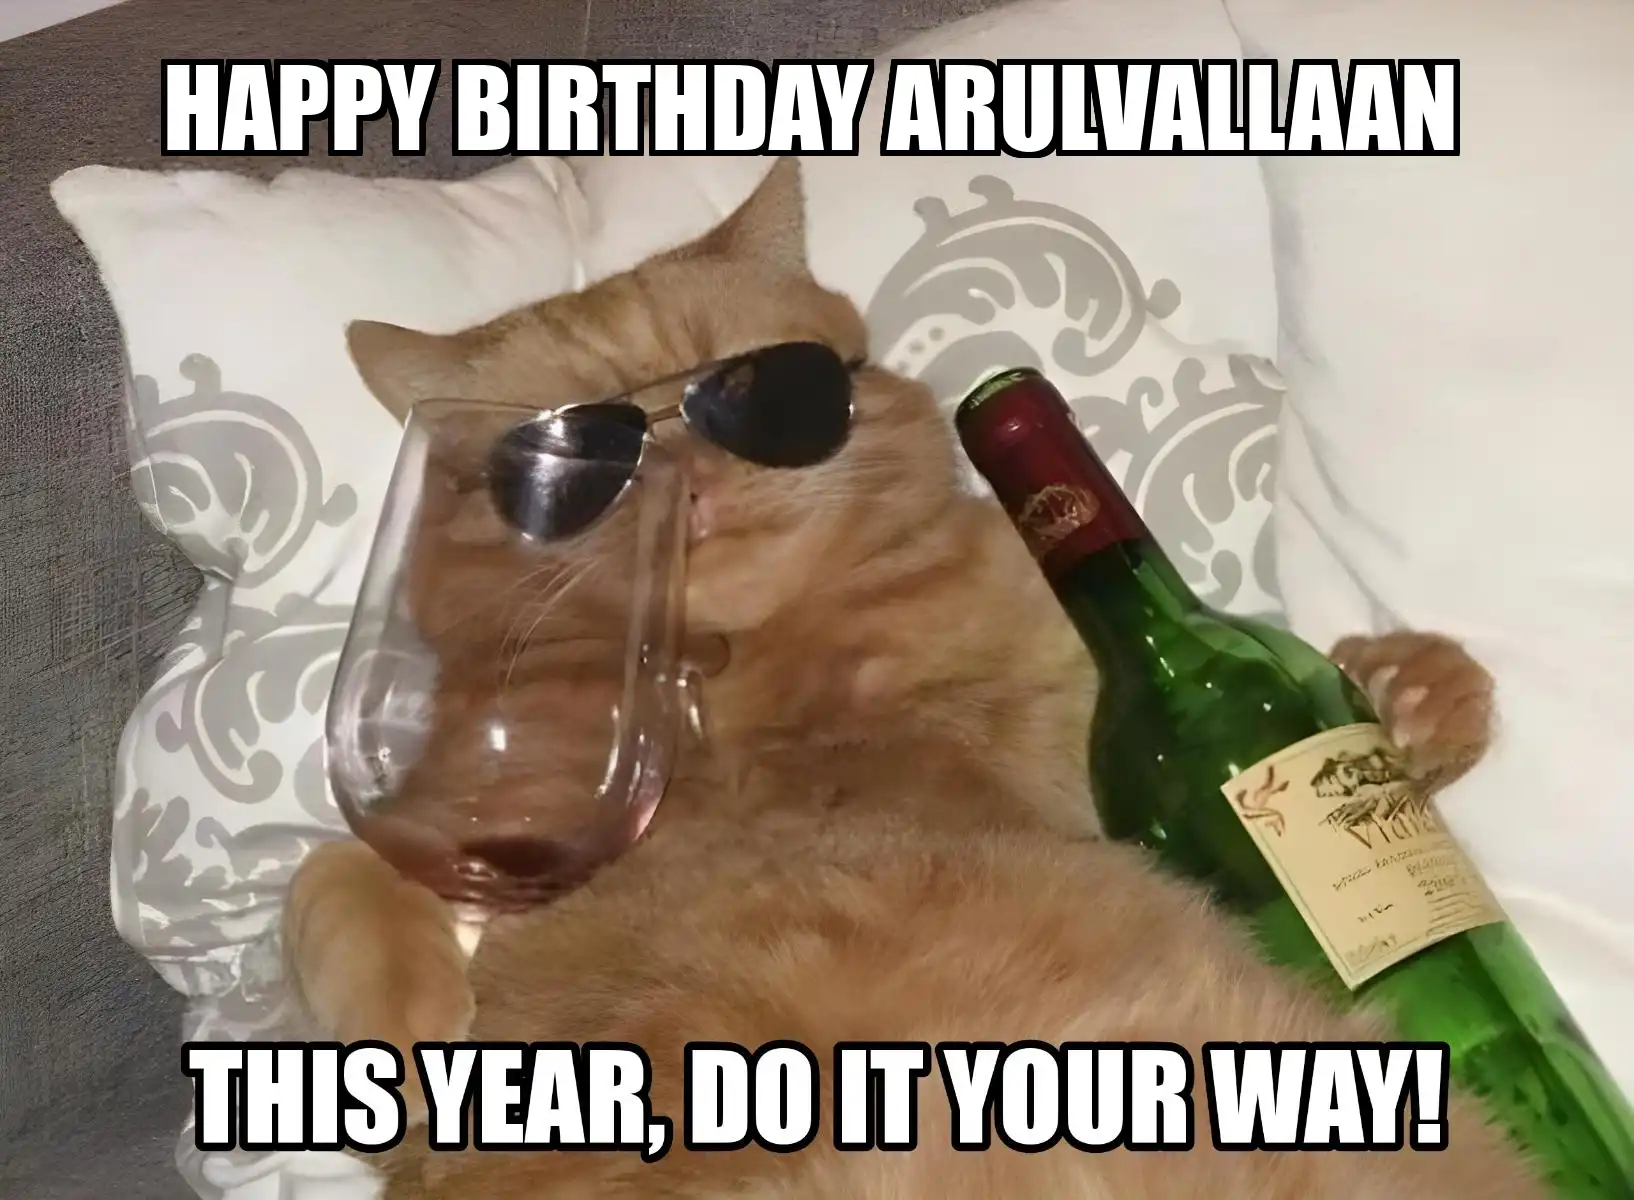 Happy Birthday Arulvallaan This Year Do It Your Way Meme